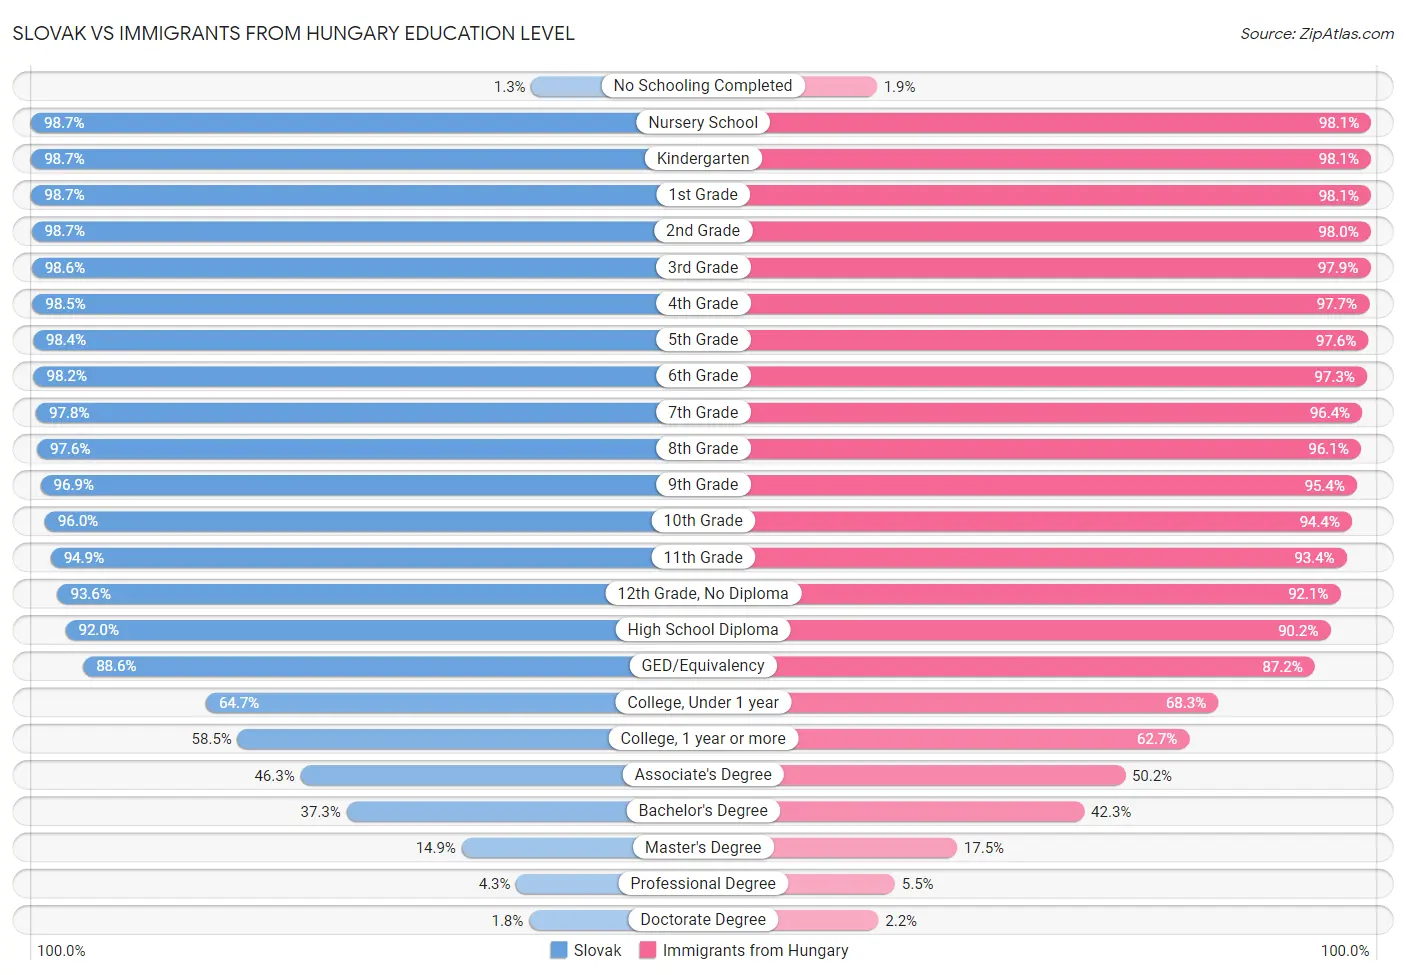 Slovak vs Immigrants from Hungary Education Level